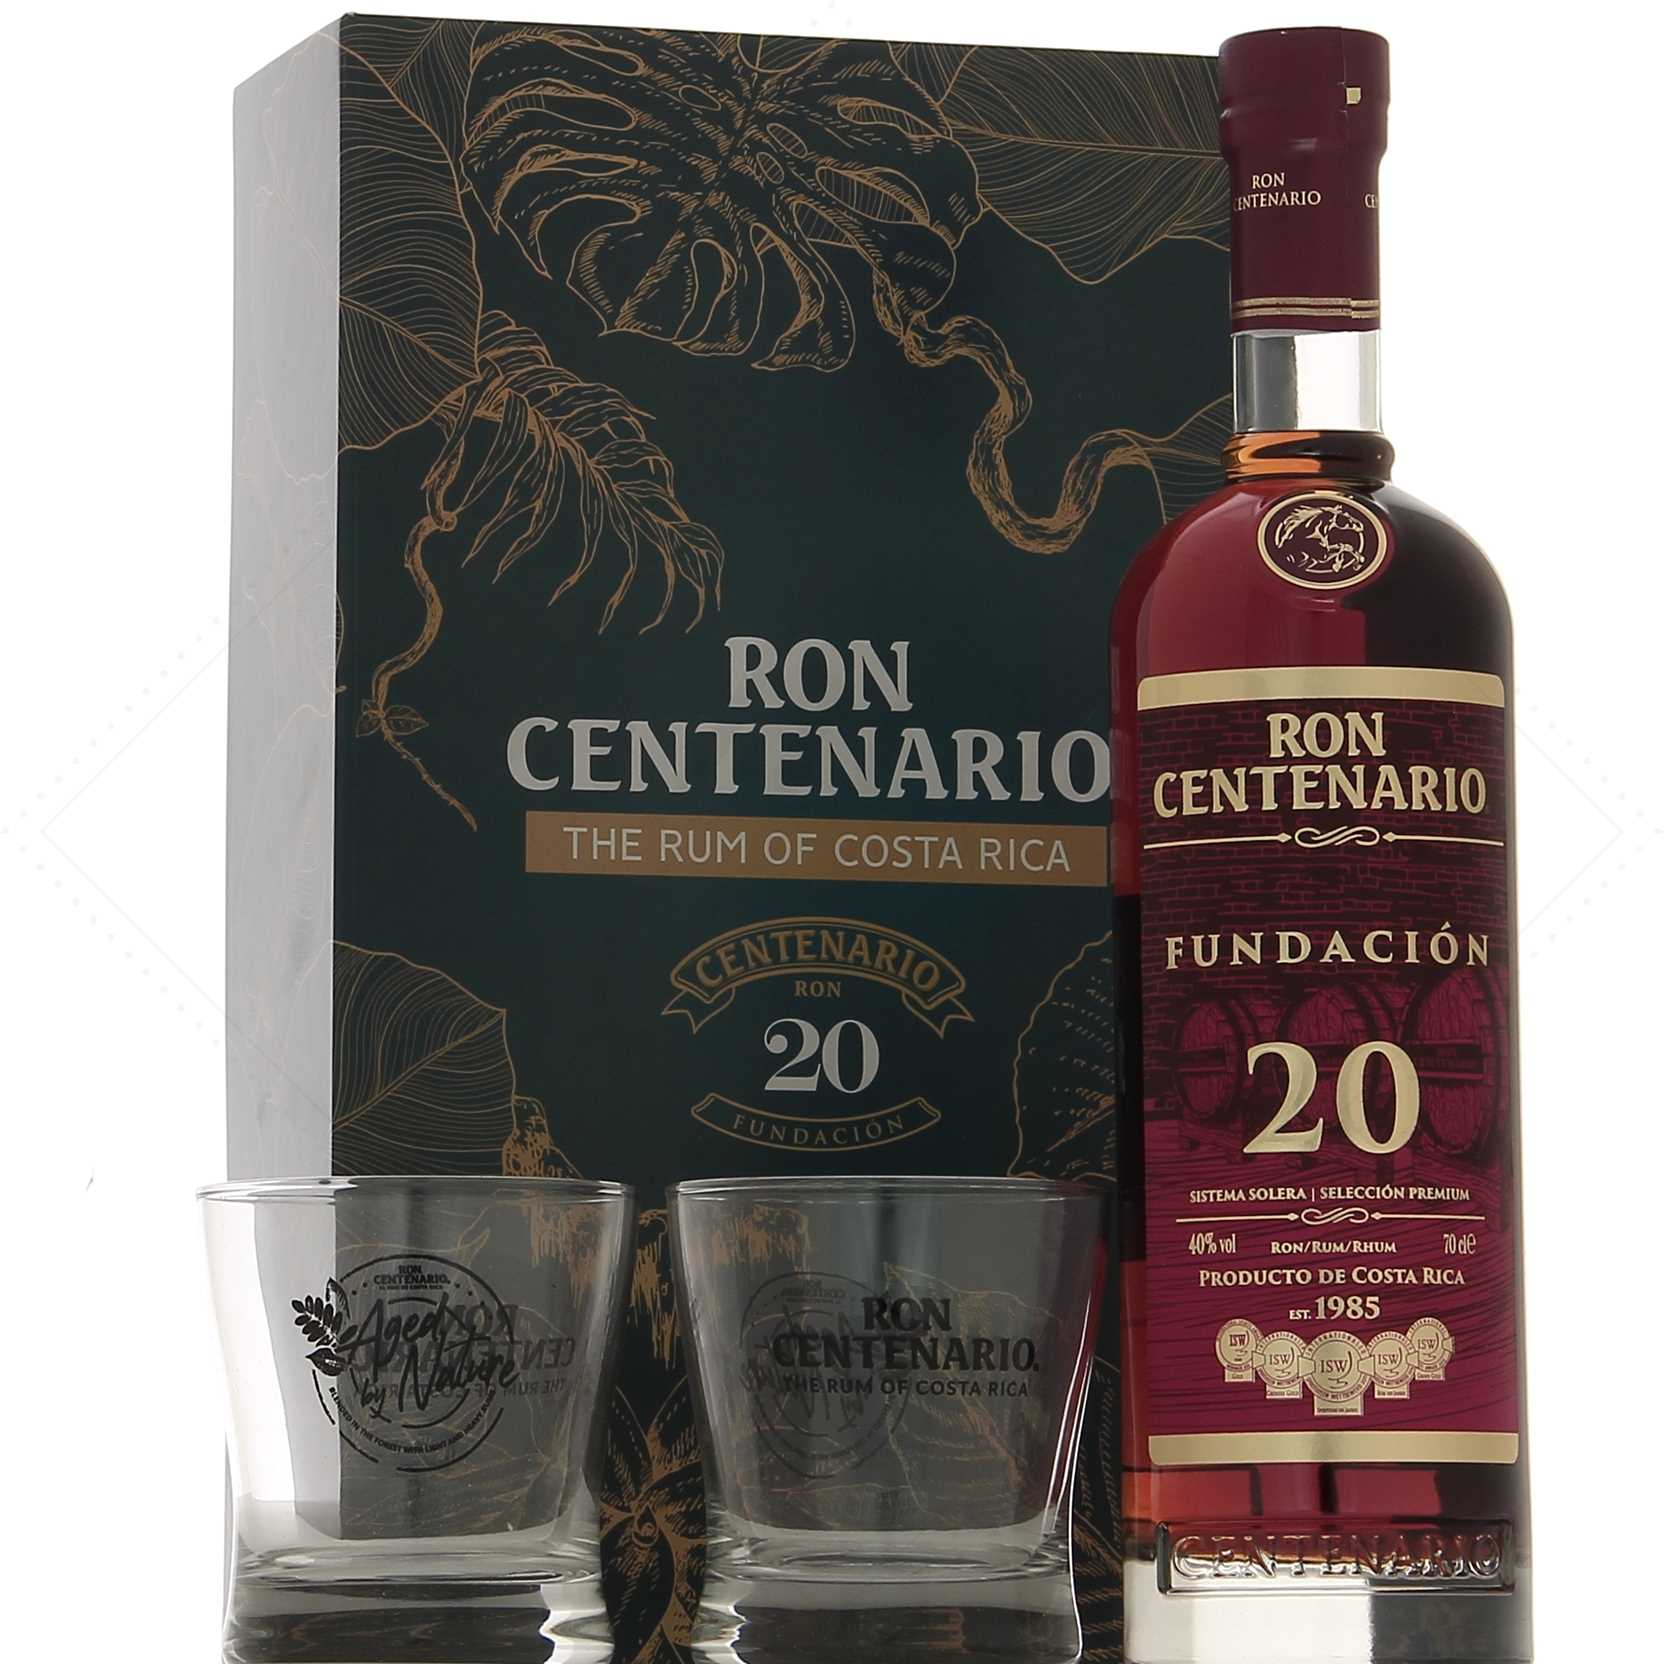 Centenario 20 in 2 a glasses - box 40° of Rhum Attitude